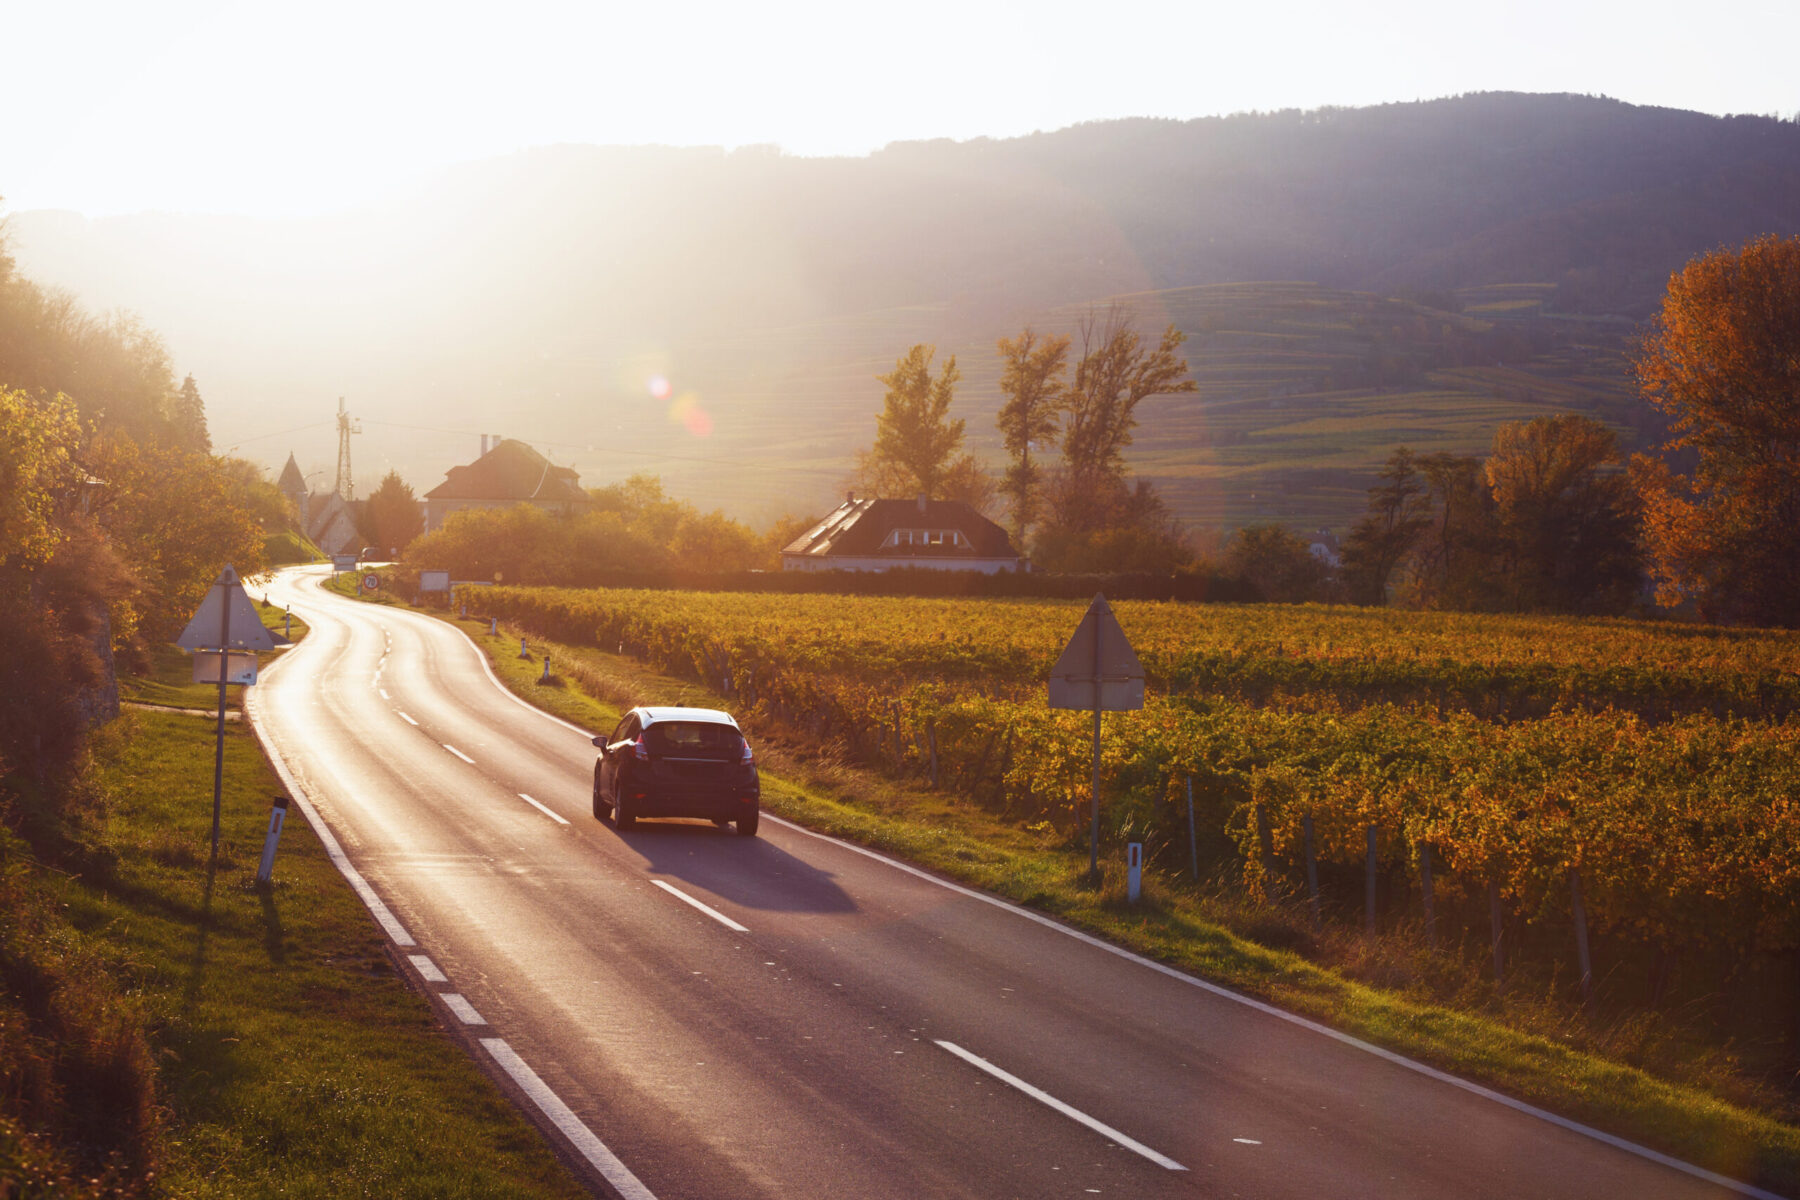 image shows a car driving through vineyards